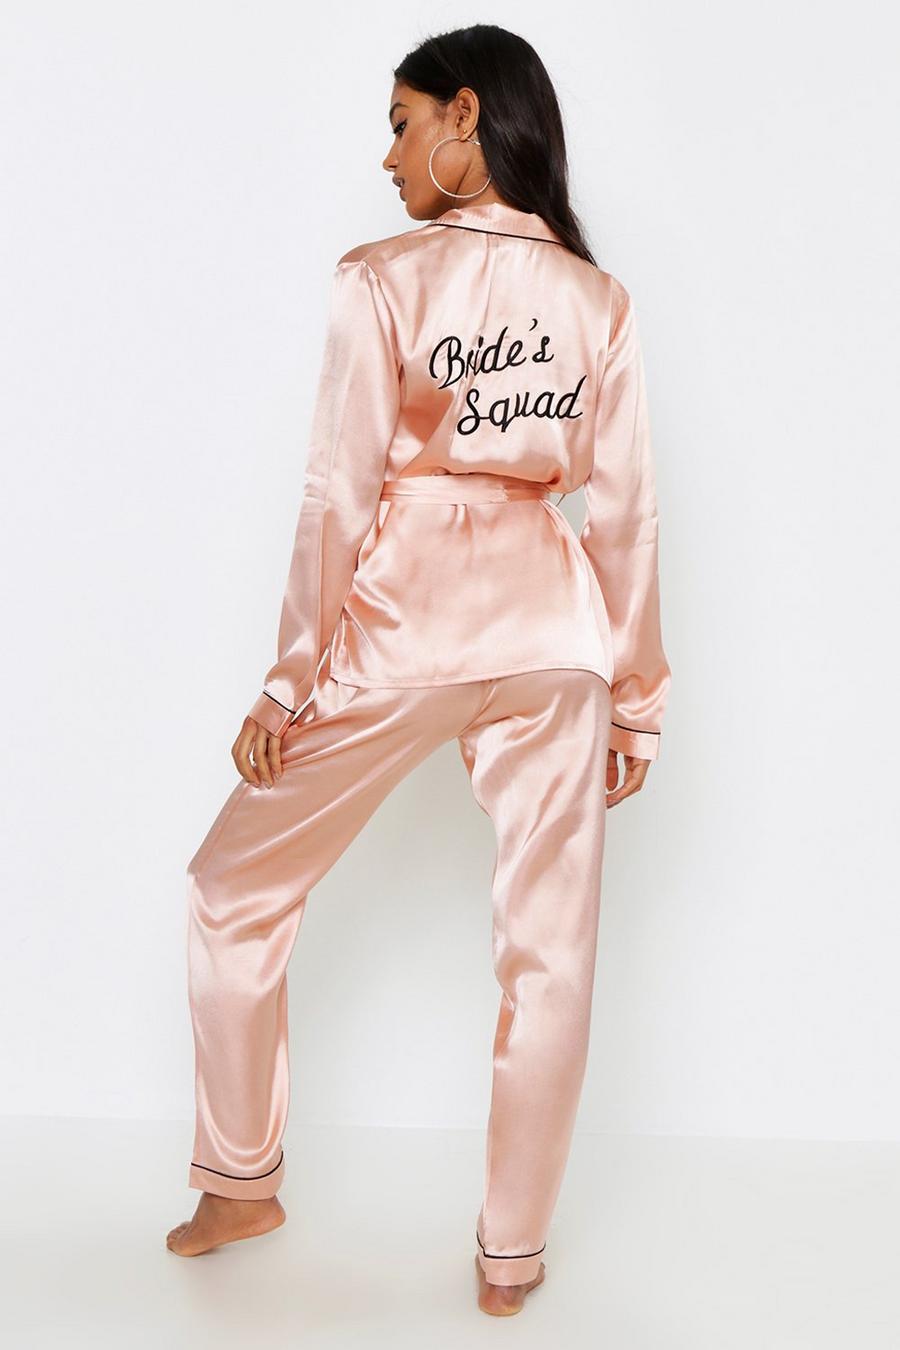 Pyjama-Set mit Bride Squad Stickerei, Rose gold metallic